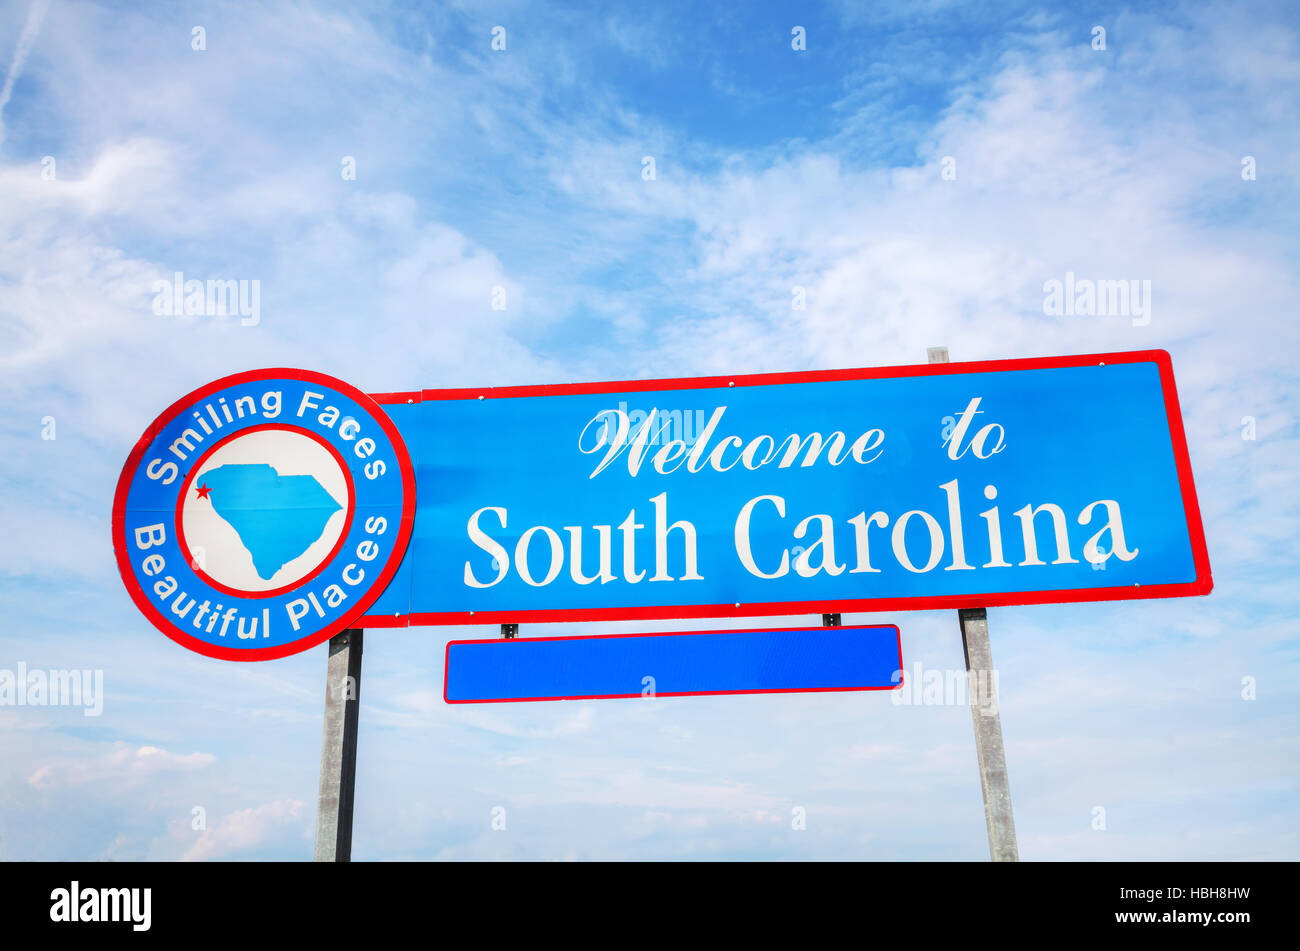 South Carolina Welcome Sign Stock Photos & South Carolina Welcome Sign